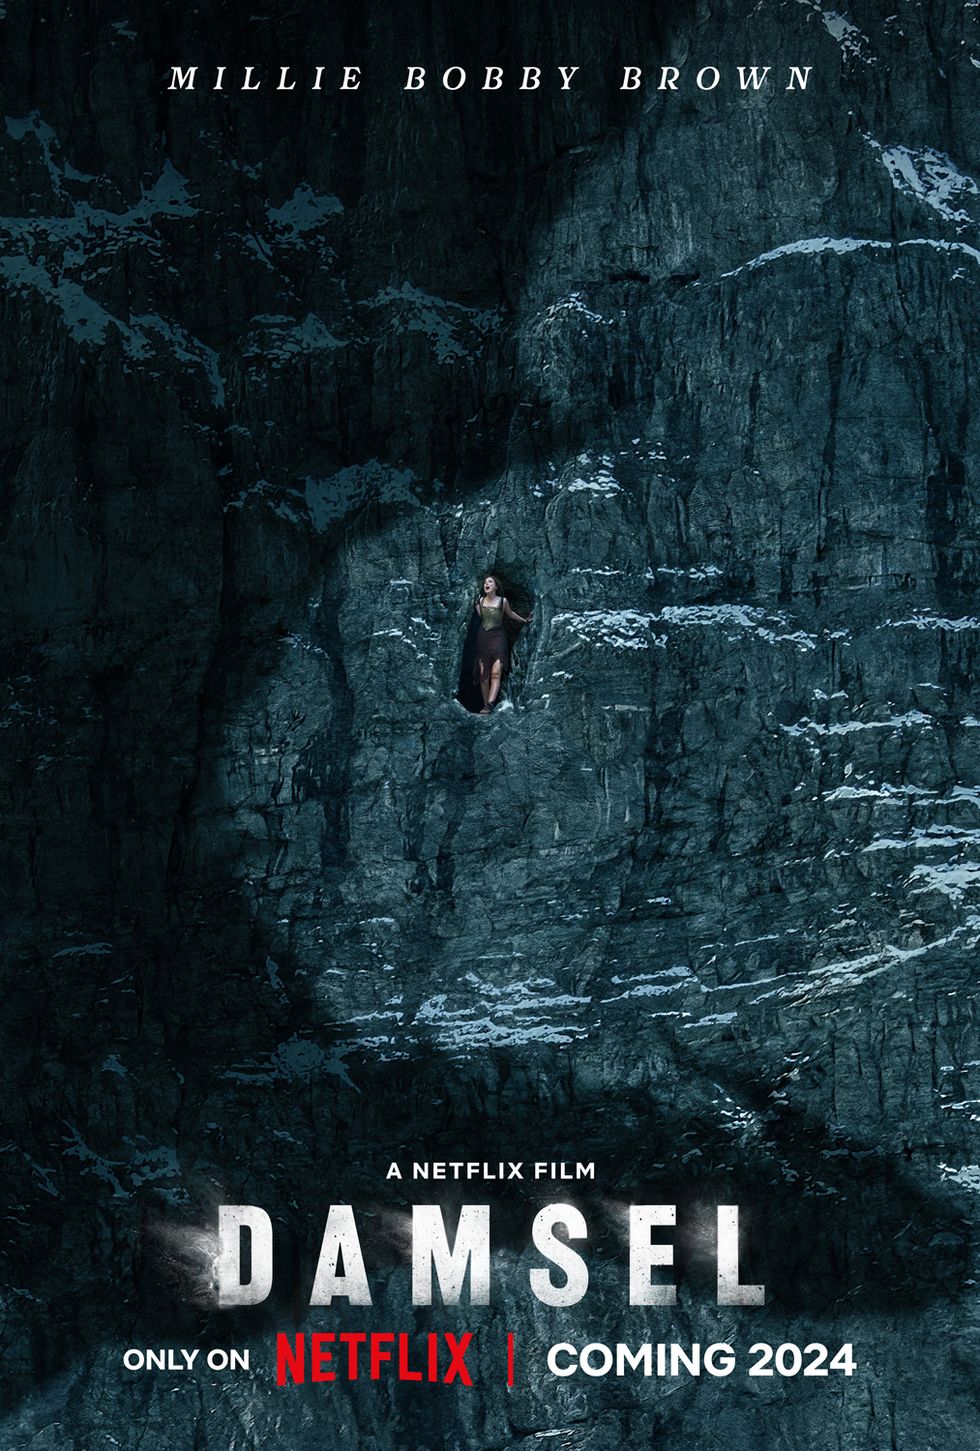 Millie Bobby Brown's Netflix movie Damsel confirms 2024 release